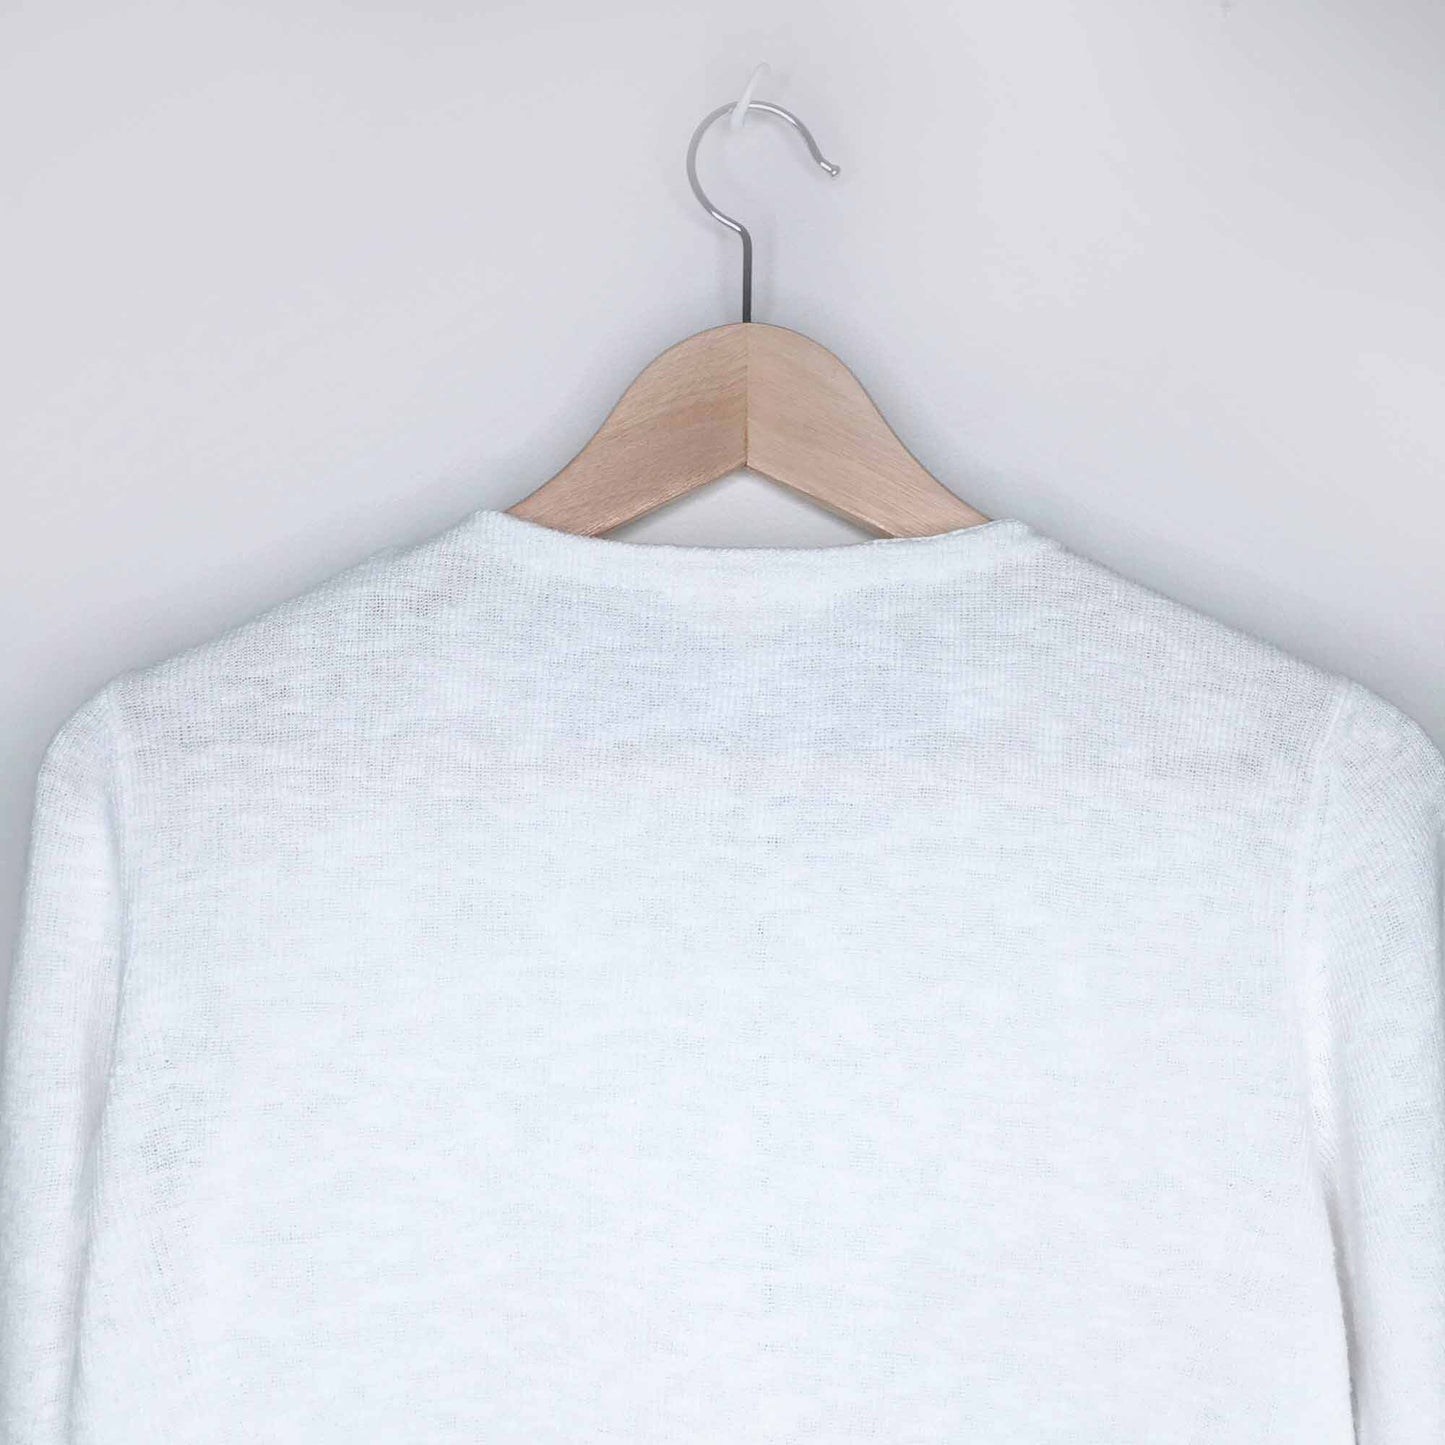 Eileen Fisher organic linen-cotton zip cardigan - size Small